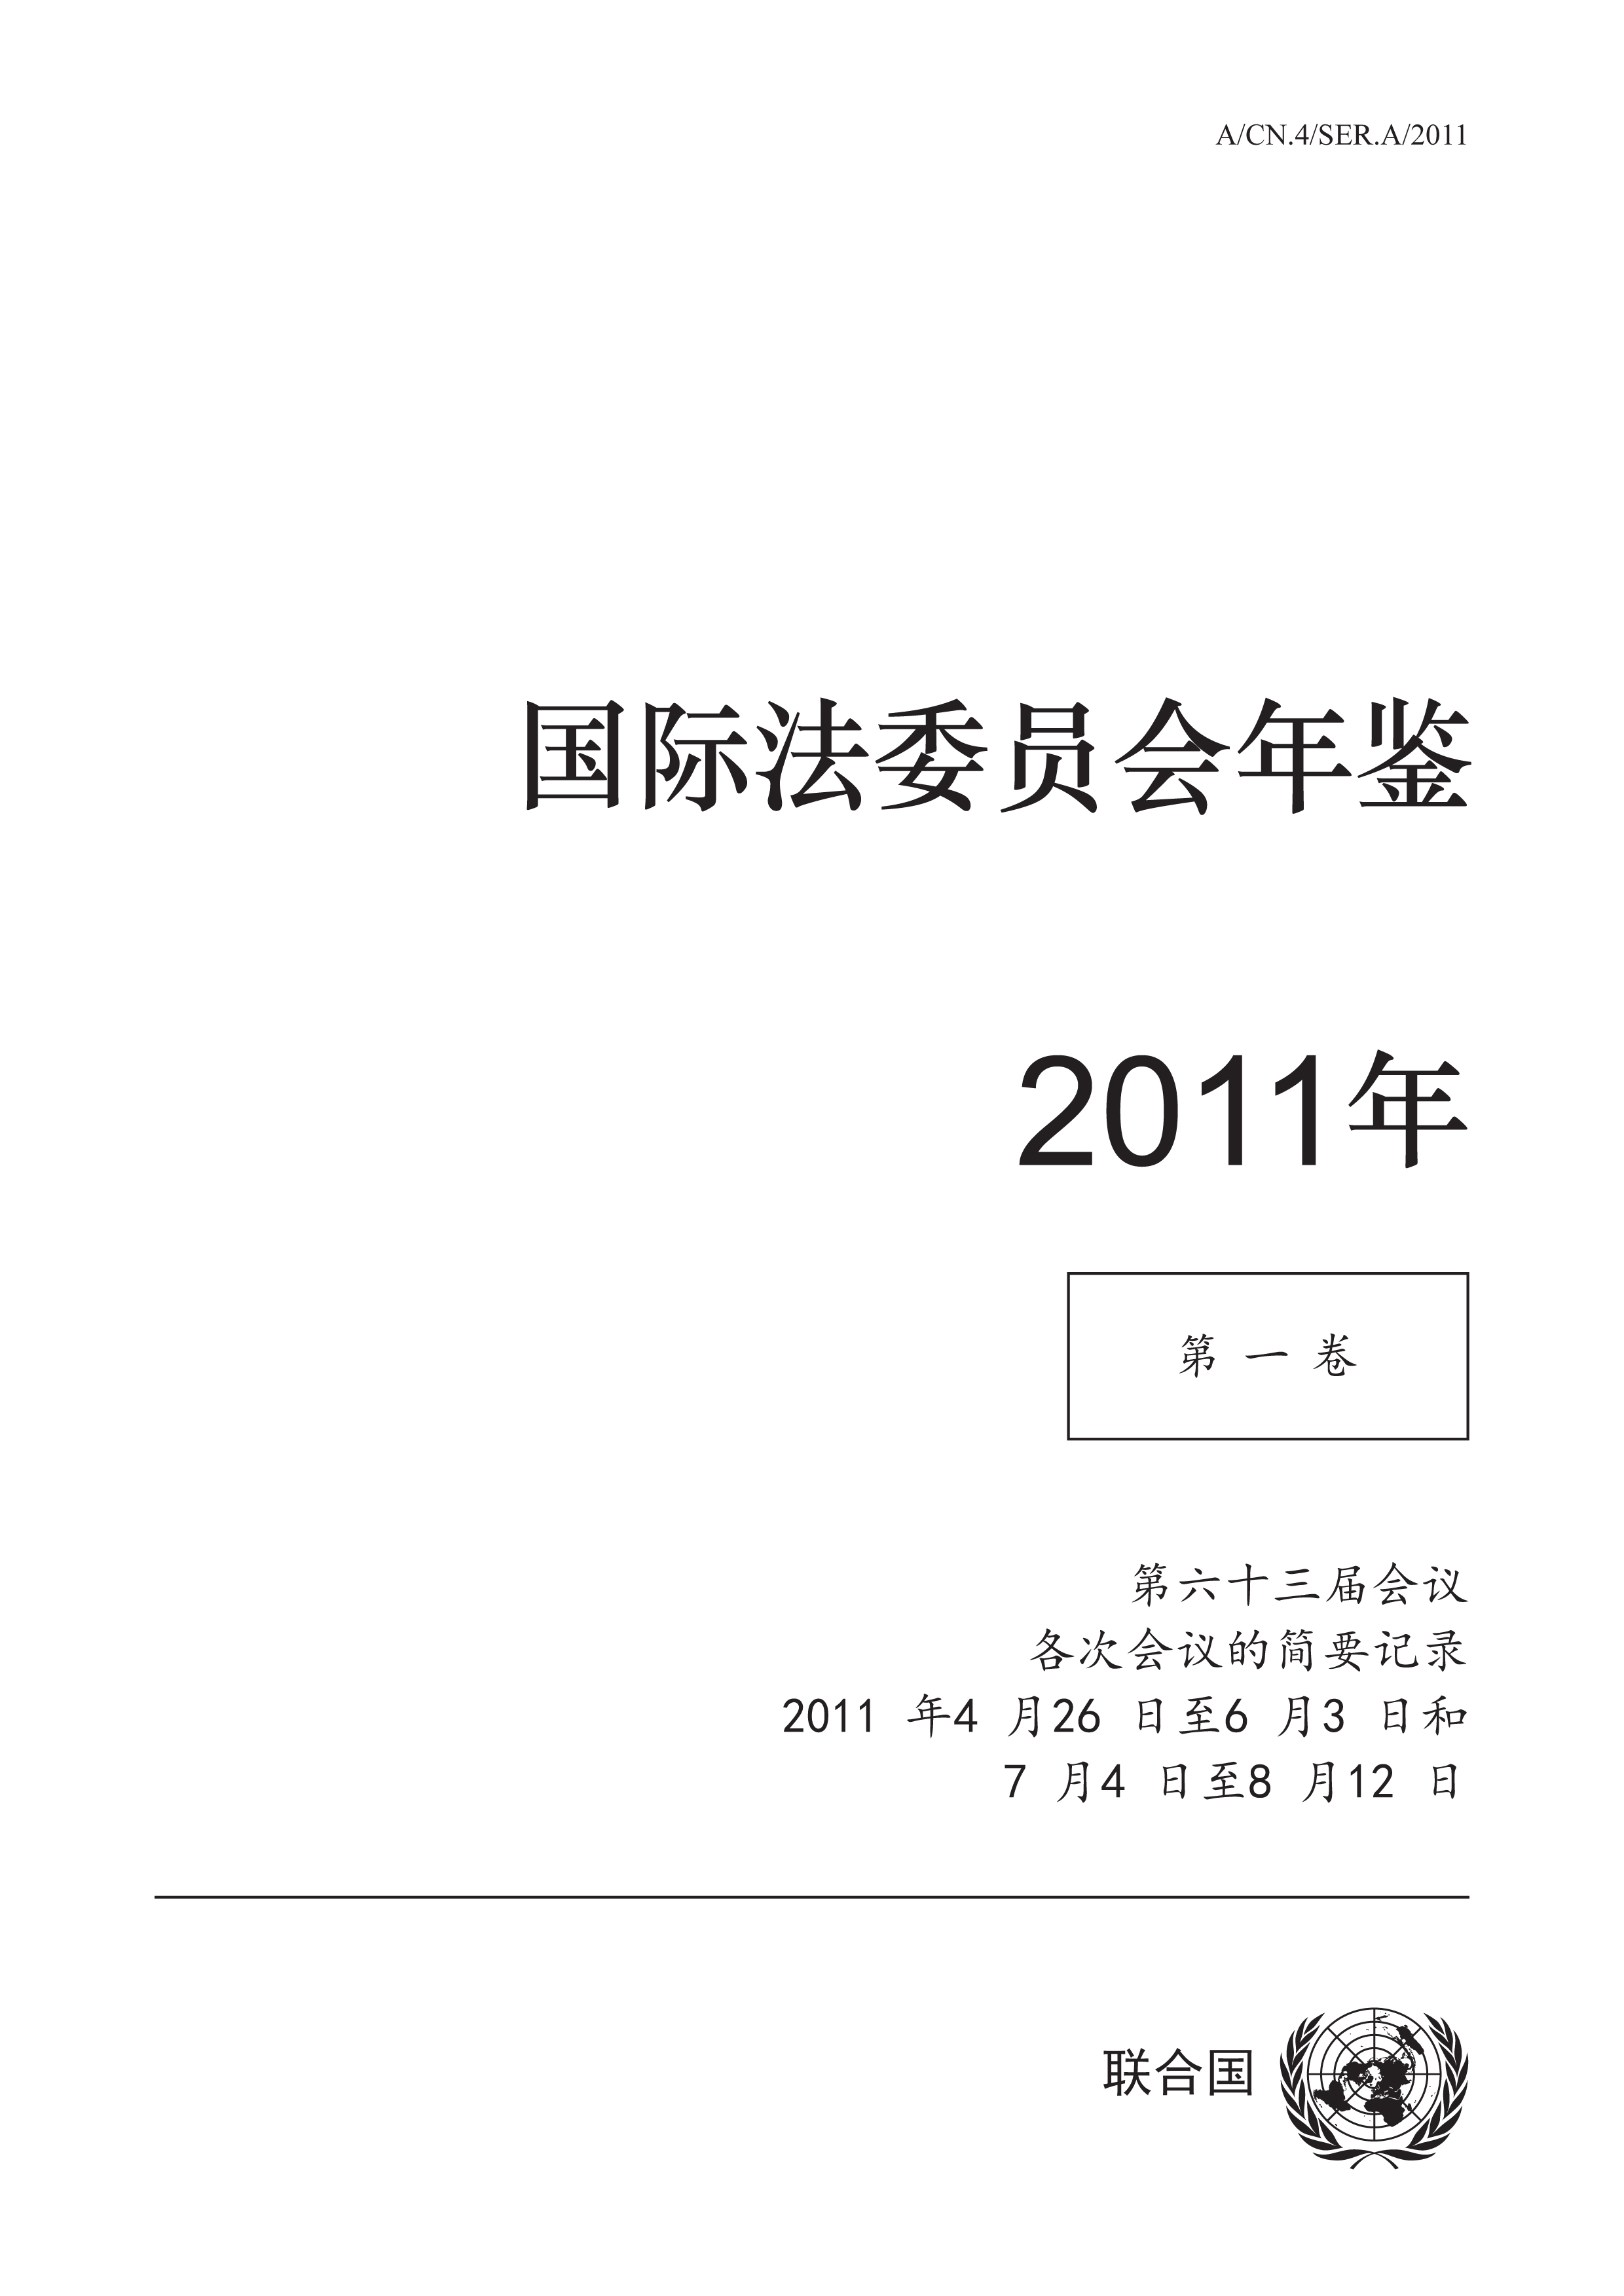 image of 国际法委员会年鉴 2011年, 第一卷